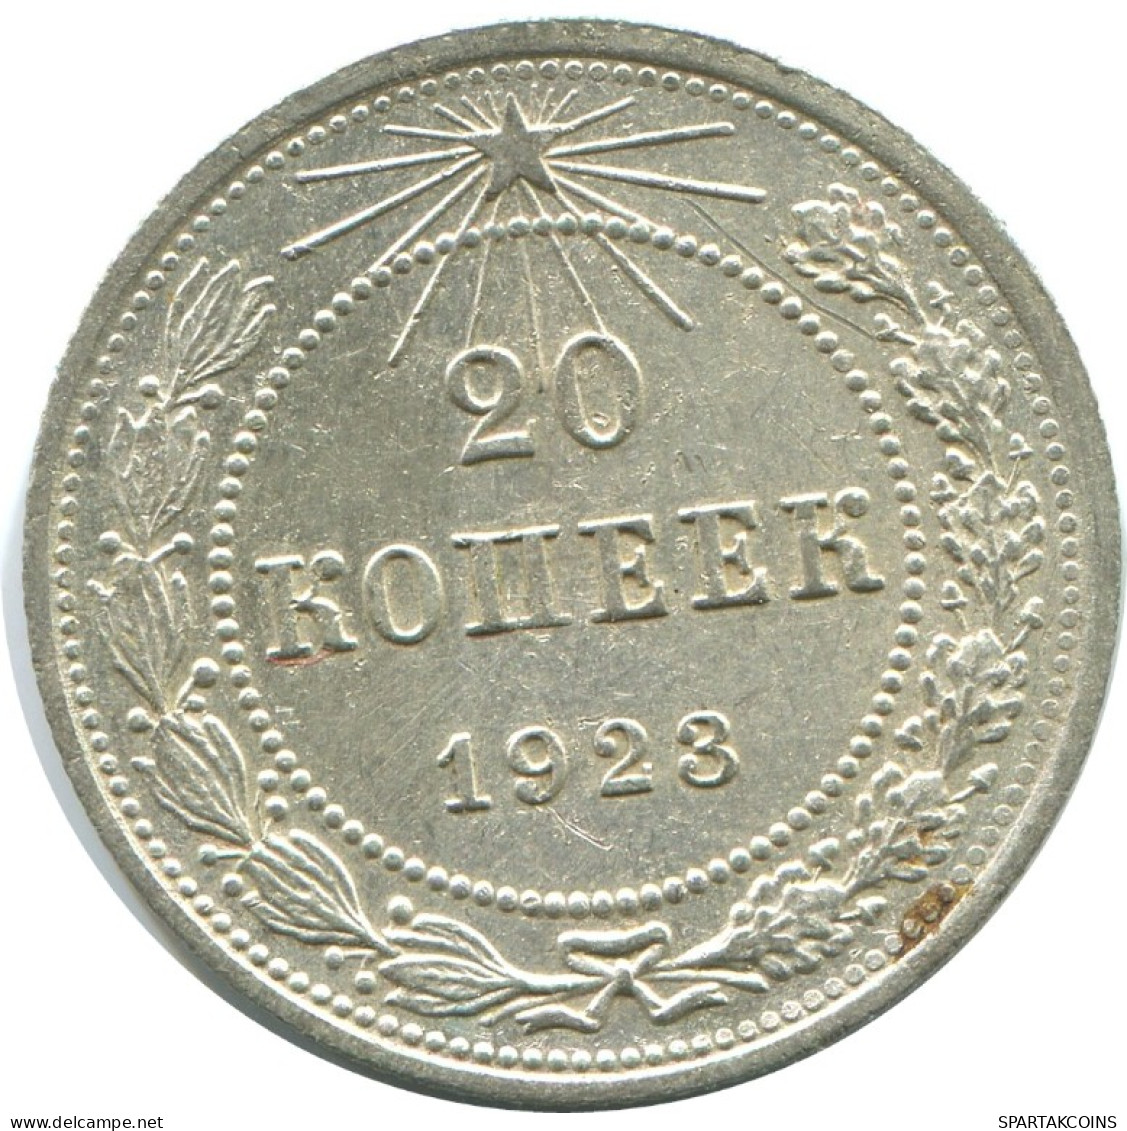 20 KOPEKS 1923 RUSSLAND RUSSIA RSFSR SILBER Münze HIGH GRADE #AF501.4.D.A - Russie